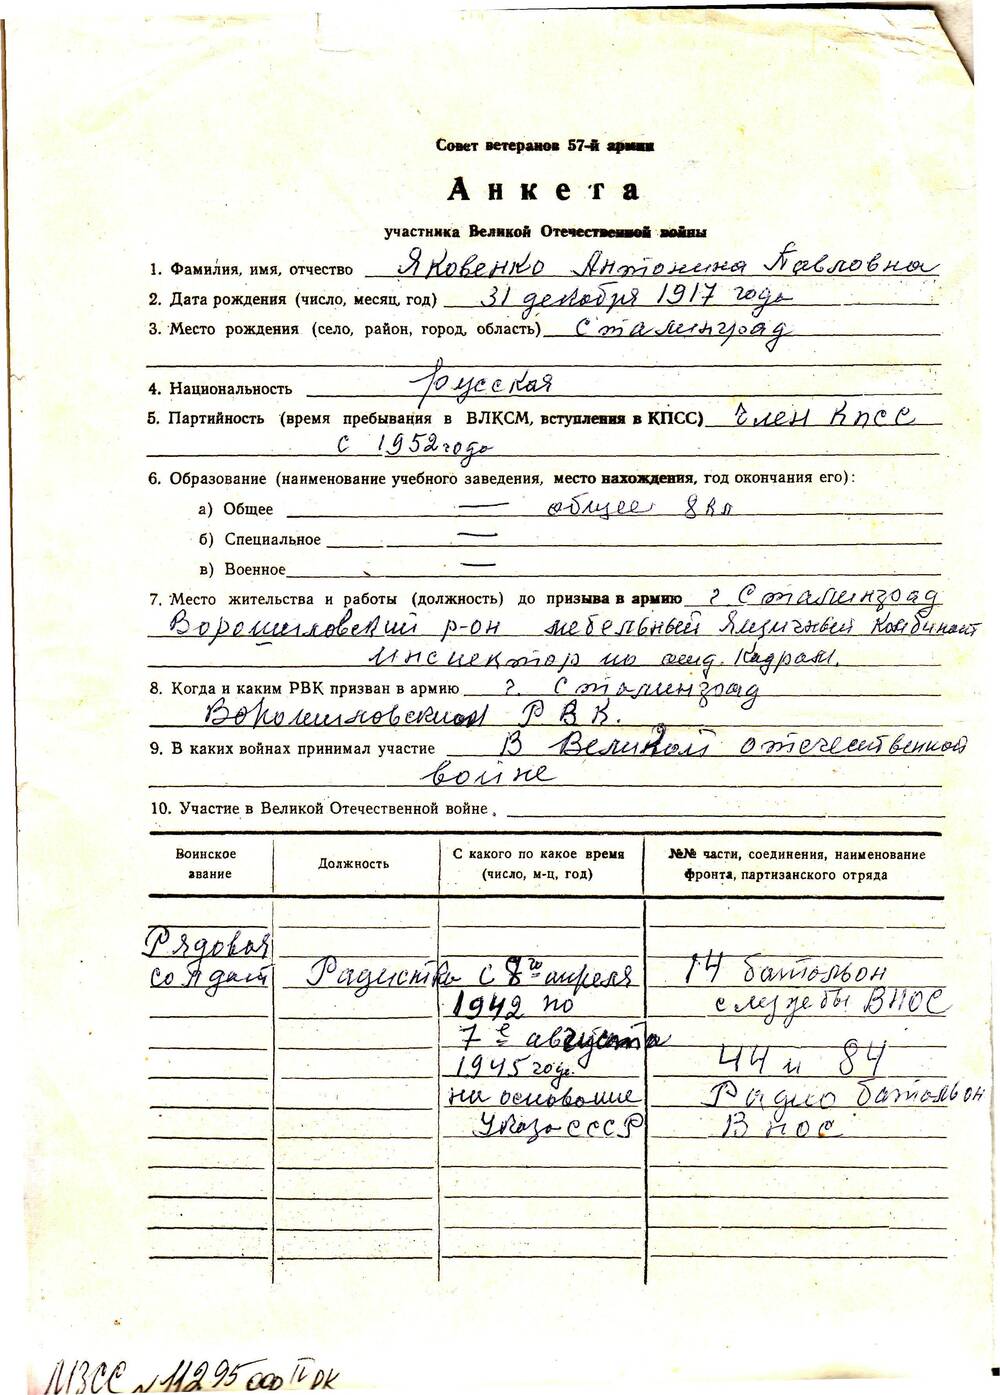 Анкета ветерана 57 армии Яковенко Антонина Павловна. 1 лист рукопись на типографском бланке.